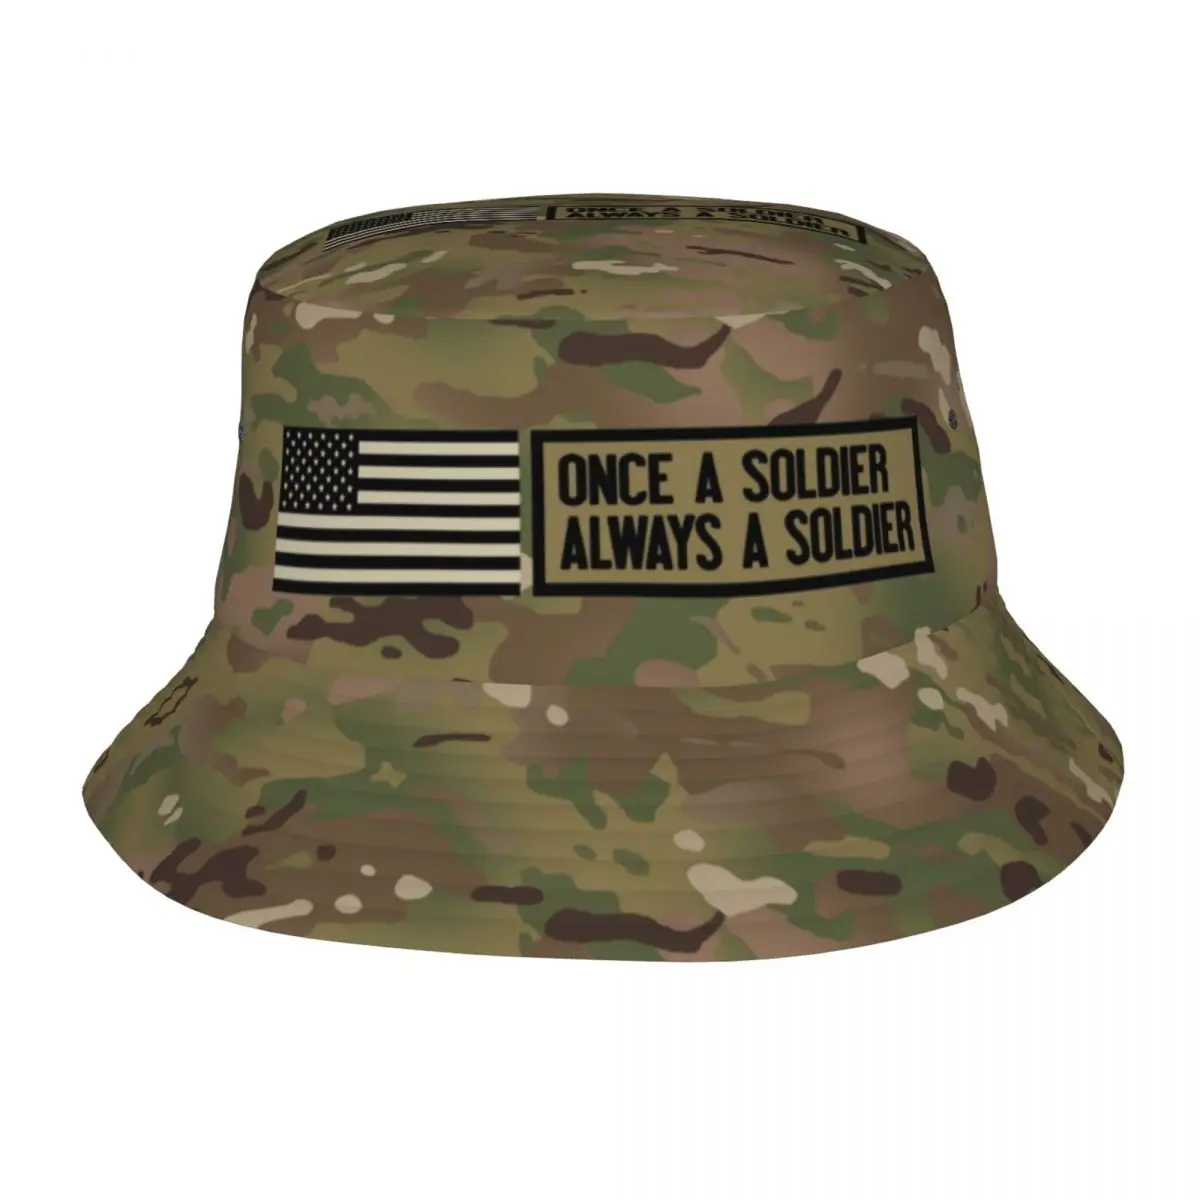  - Green Army Camouflage Bucket Hats Print Camo Design Pattern Summer Travel Beach Camo Bape Design Pattern Fisherman Cap